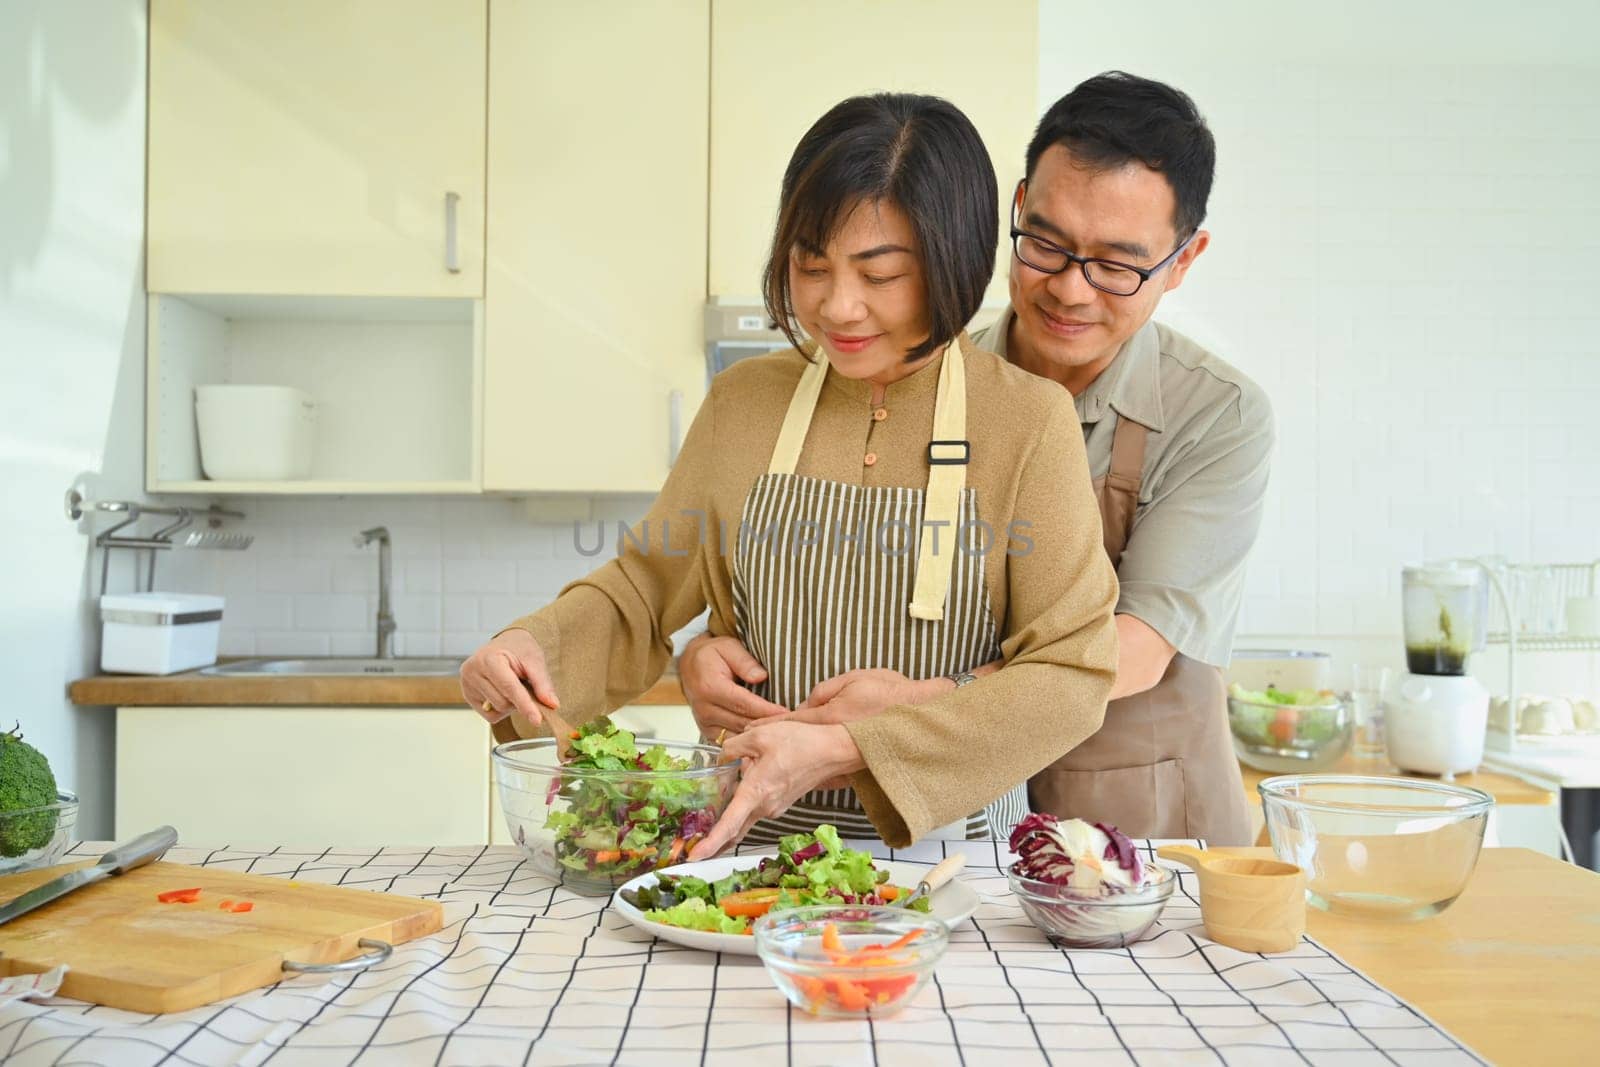 Loving middle age couple preparing healthy vegetables salad in kitchen. Happy senior lifestyle concept. by prathanchorruangsak